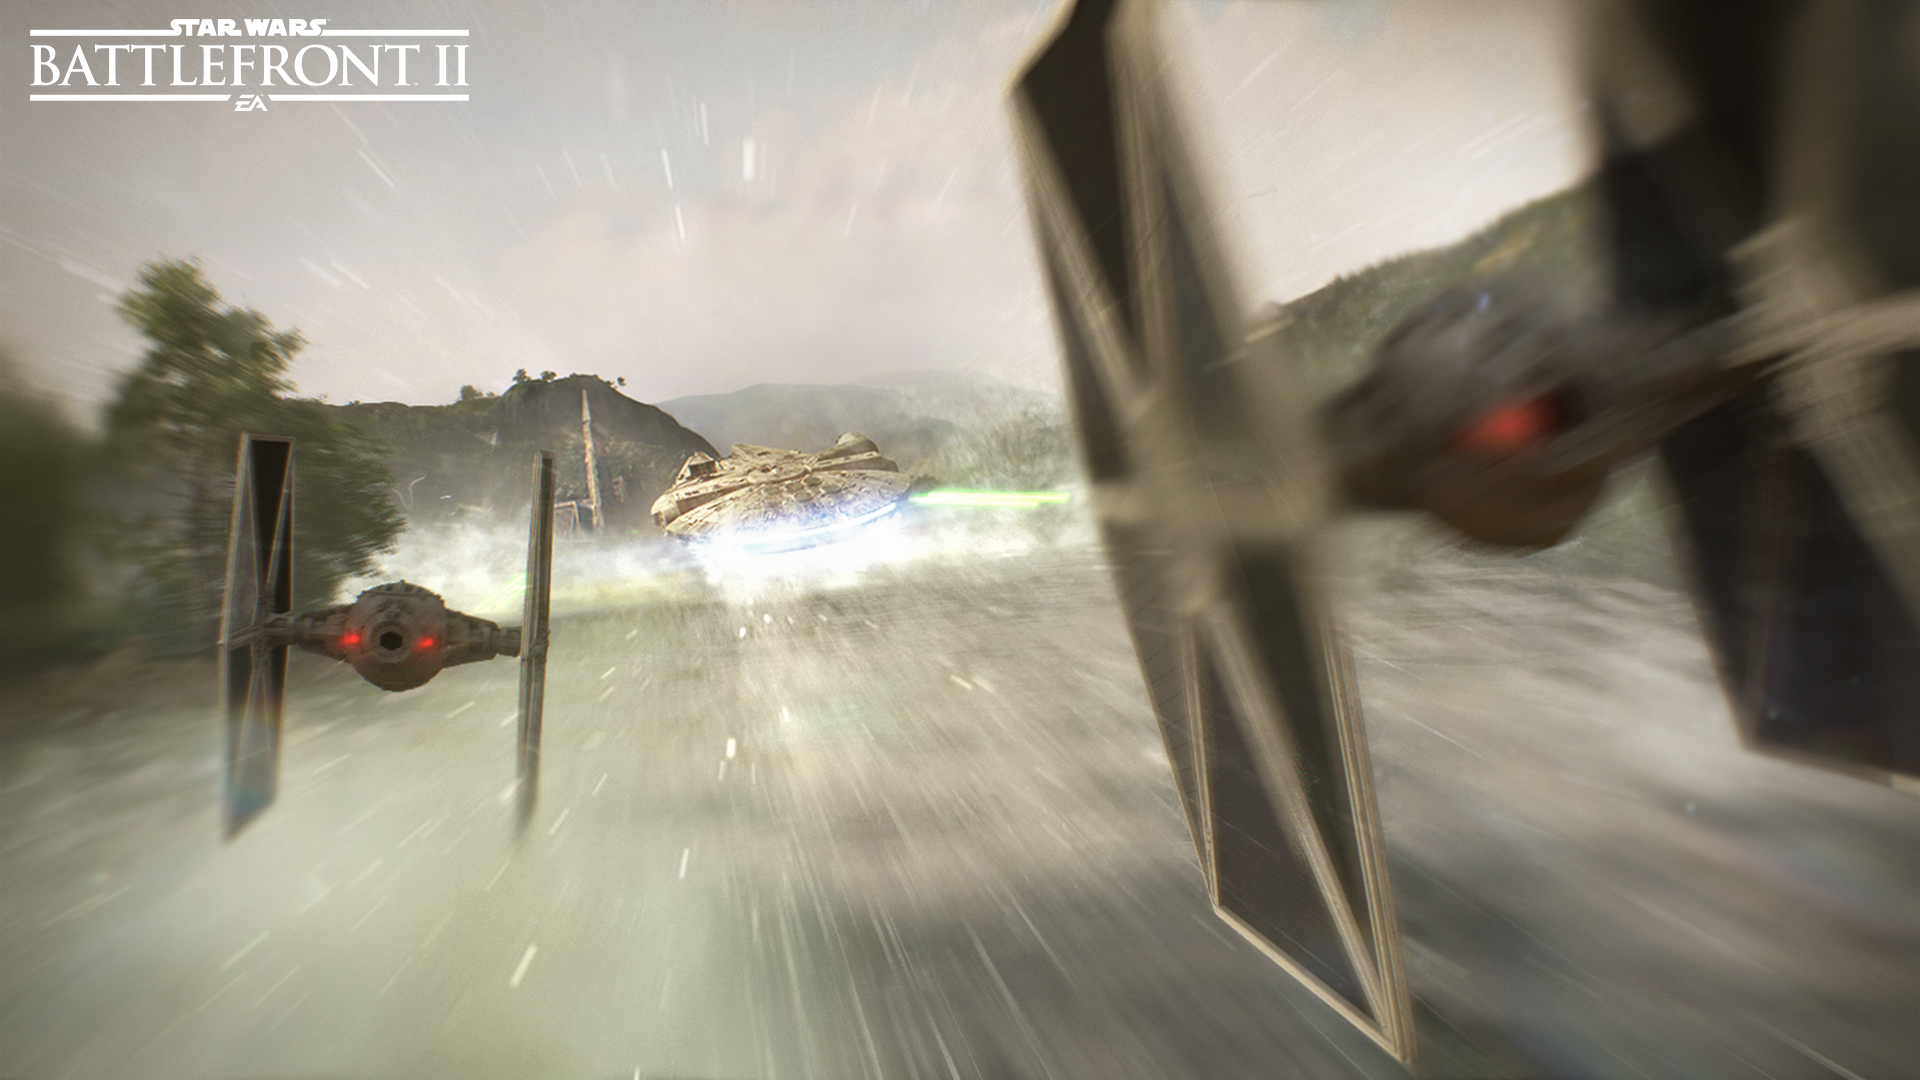 star wars battlefront 2 multiplayer preview image 5